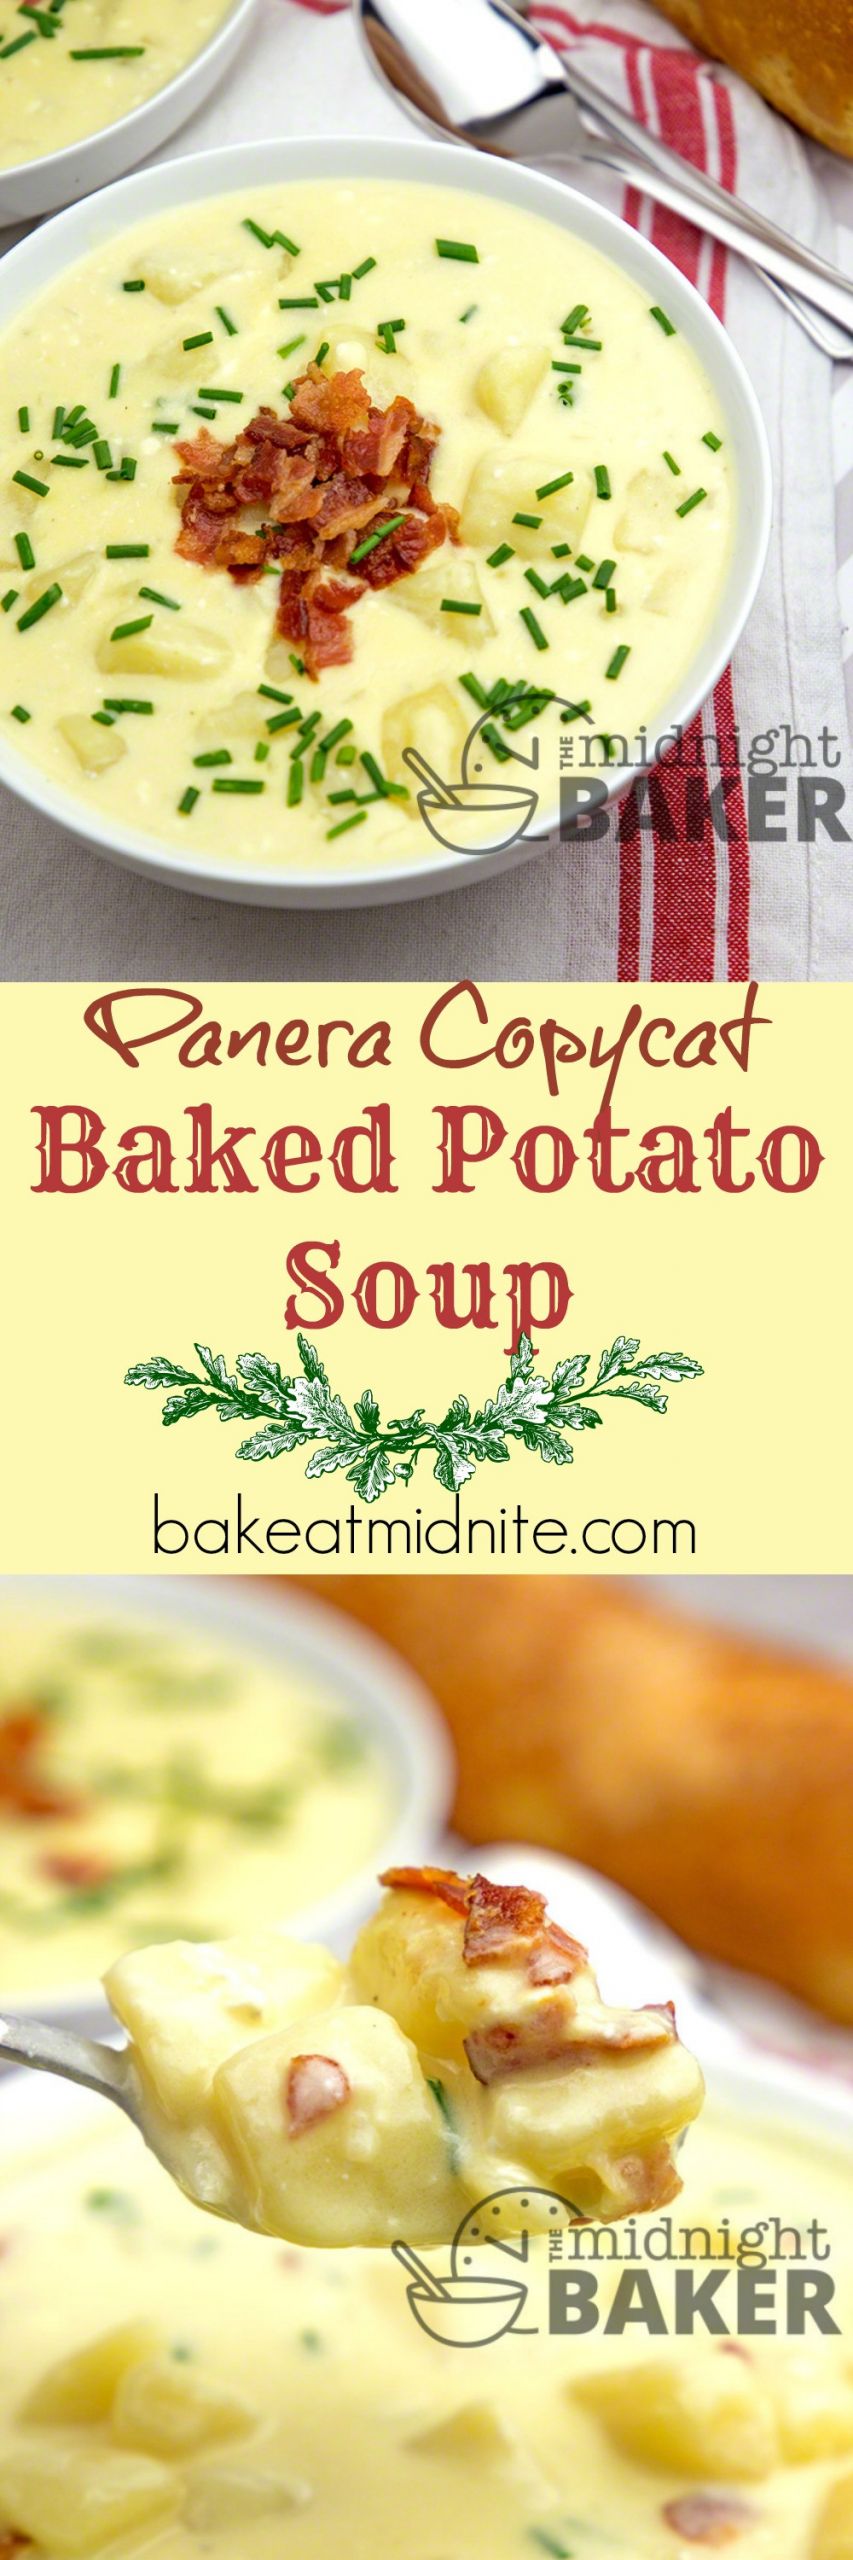 Panera Baked Potato Soup Recipe
 Copycat Panera Baked Potato Soup The Midnight Baker